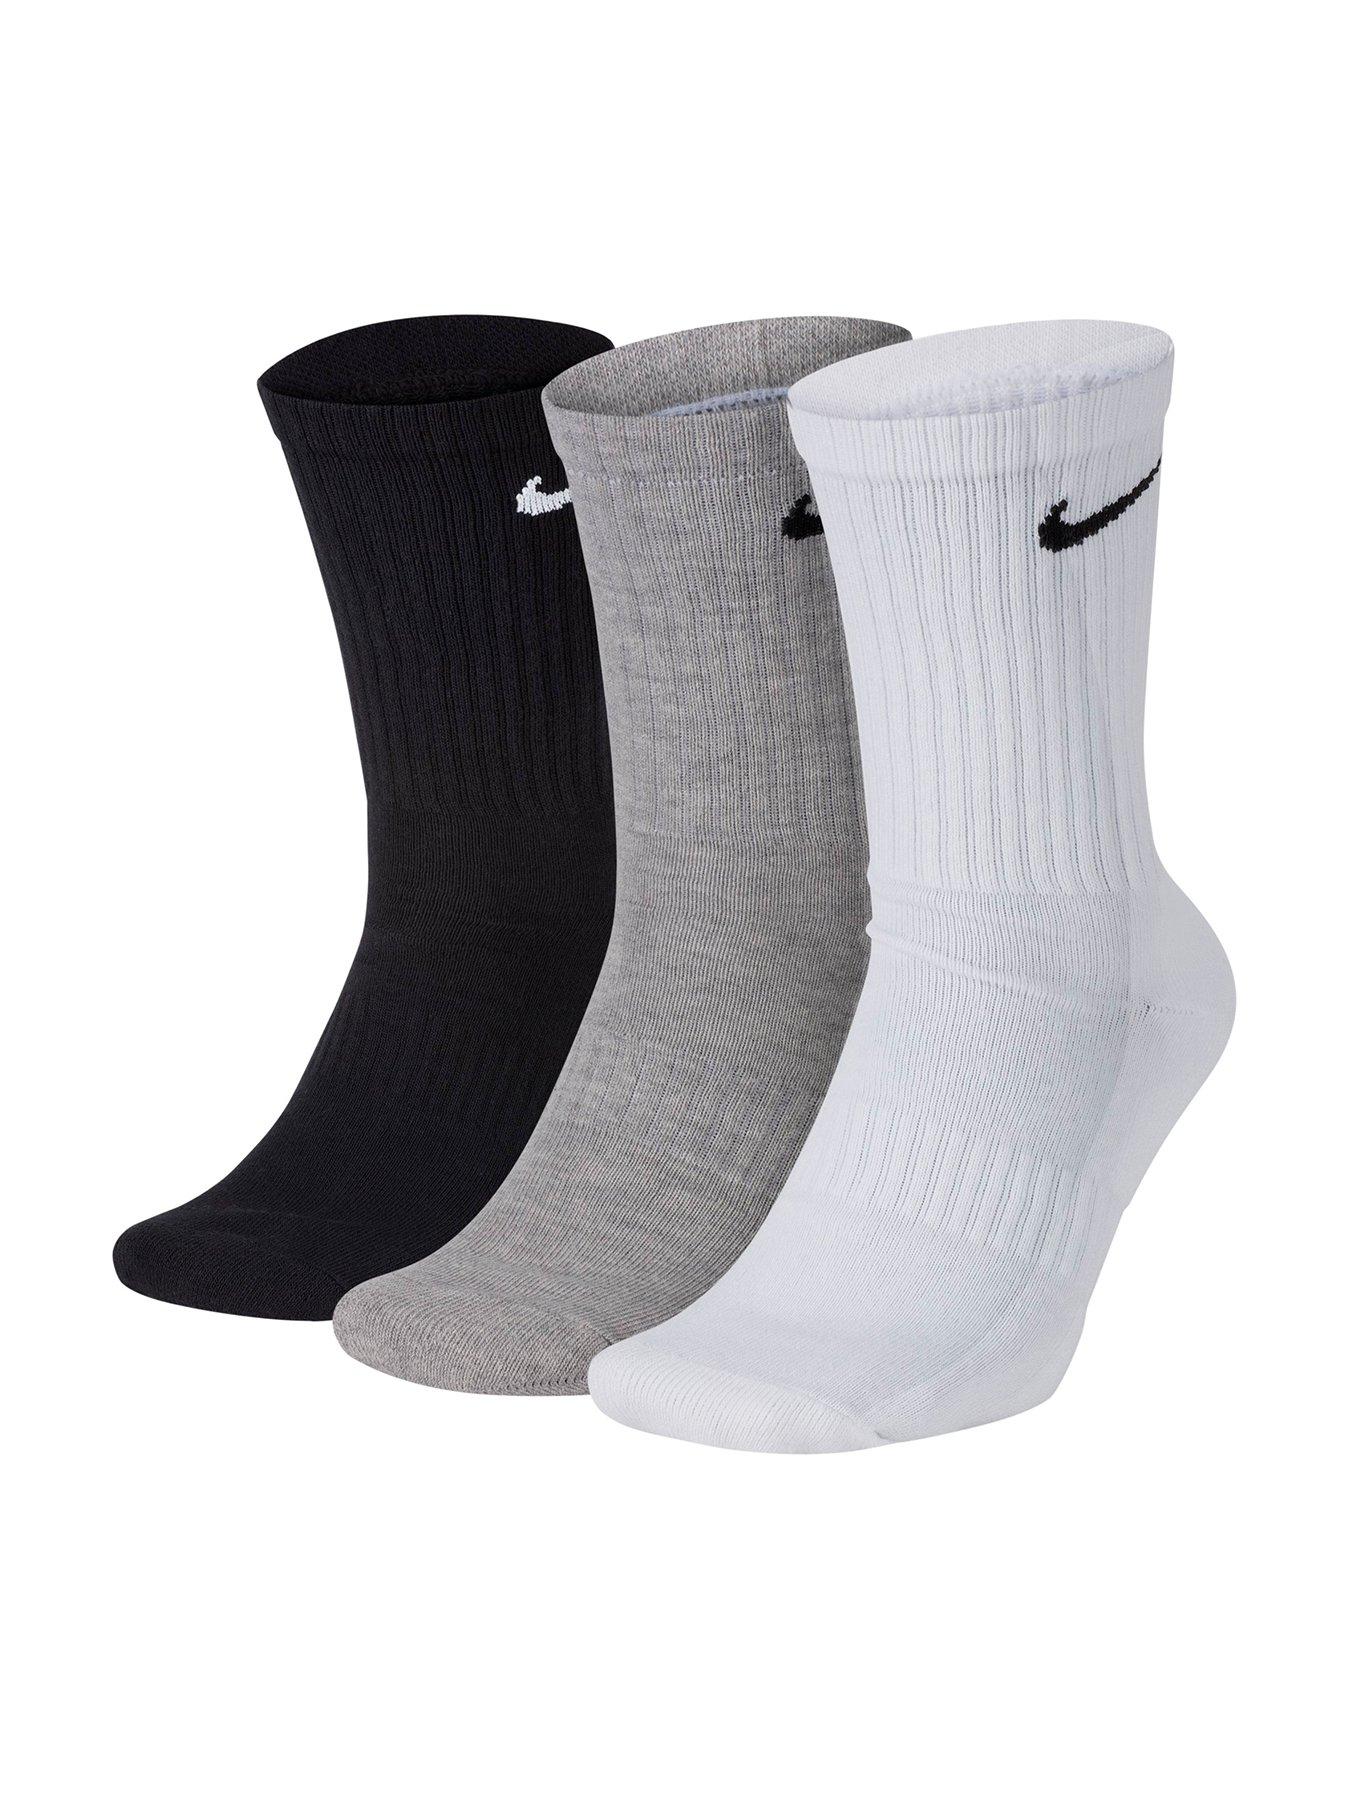 Nike Everyday Cushion Crew Socks (3 Pack) - Multi | very.co.uk